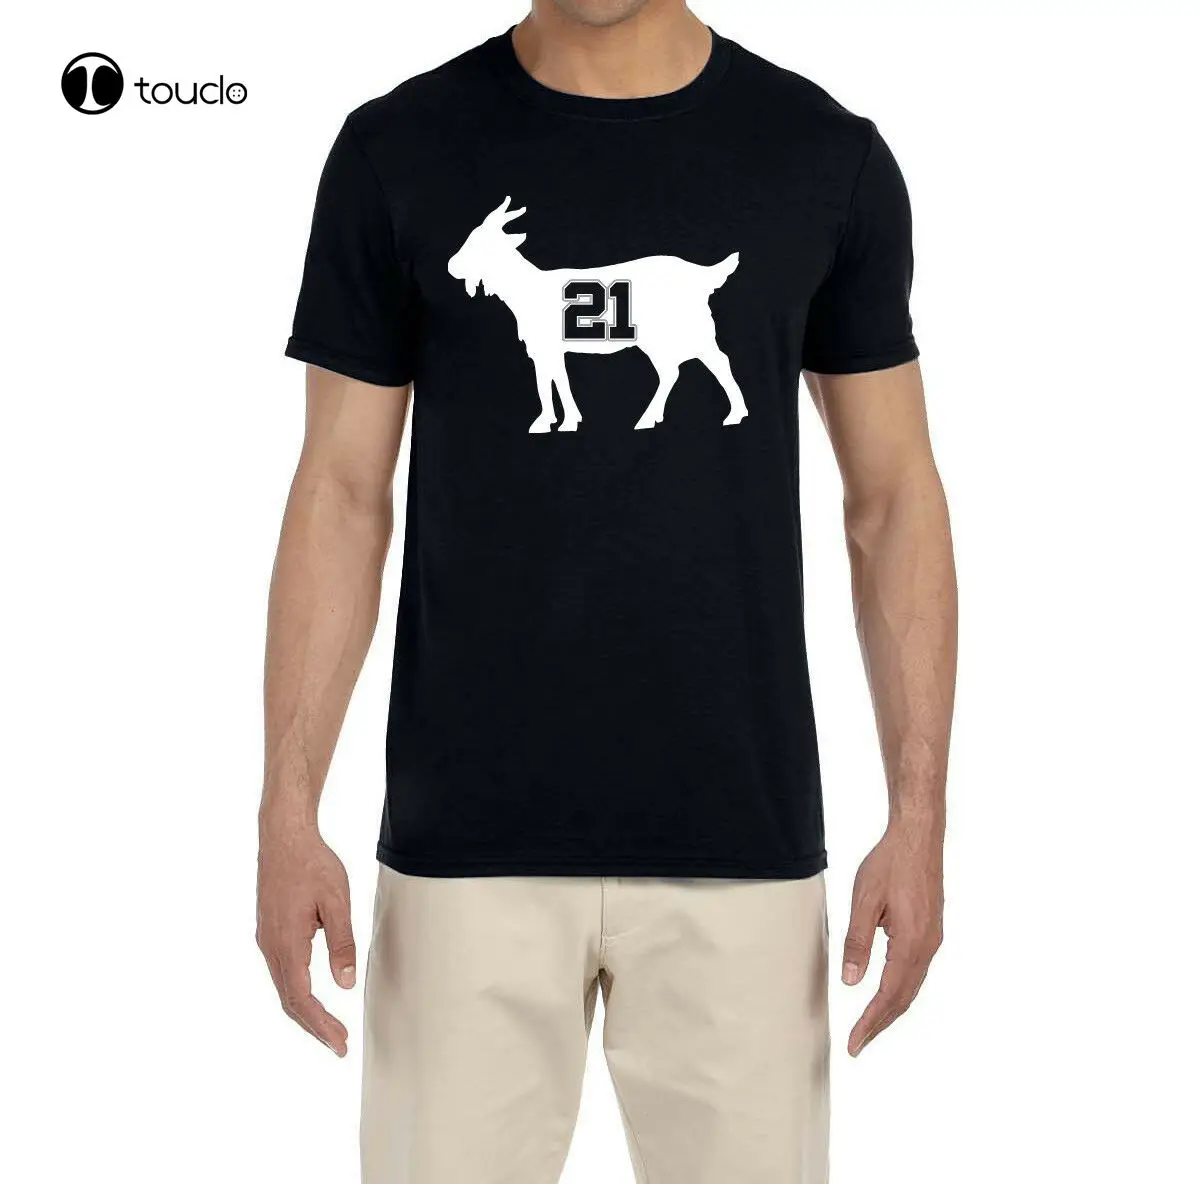 

New San Antonio Tim Duncan Goat T-Shirt Cotton Tee Shirt Unisex